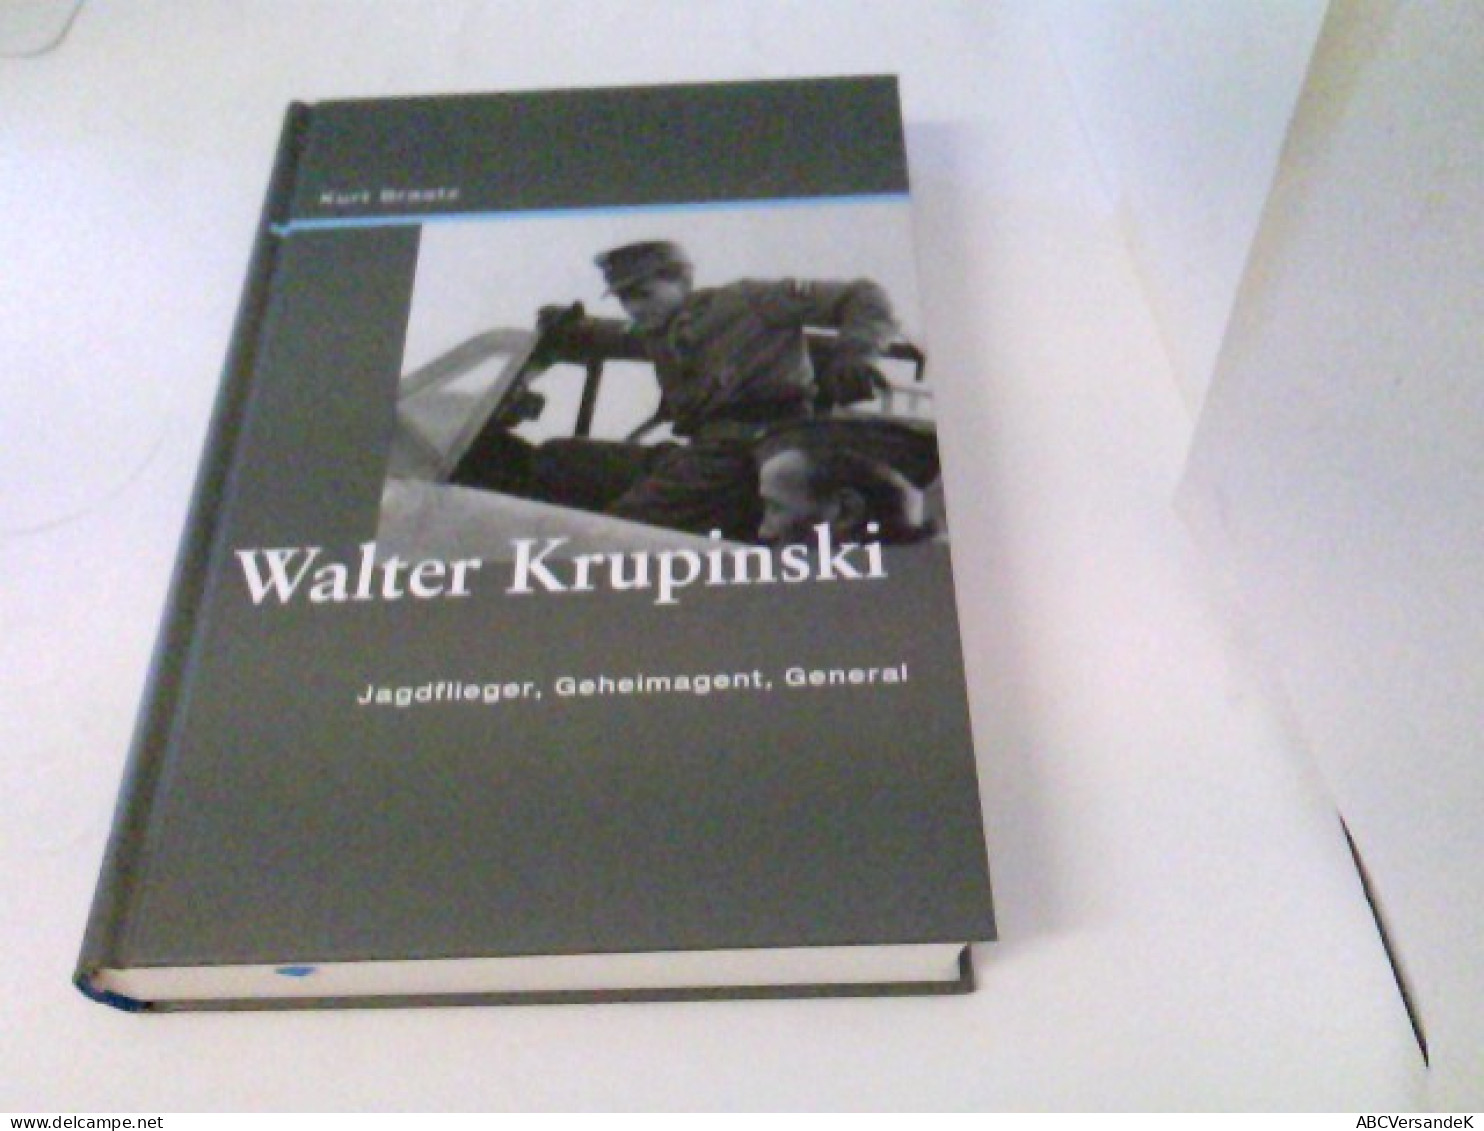 Walter Krupinski - Transporte